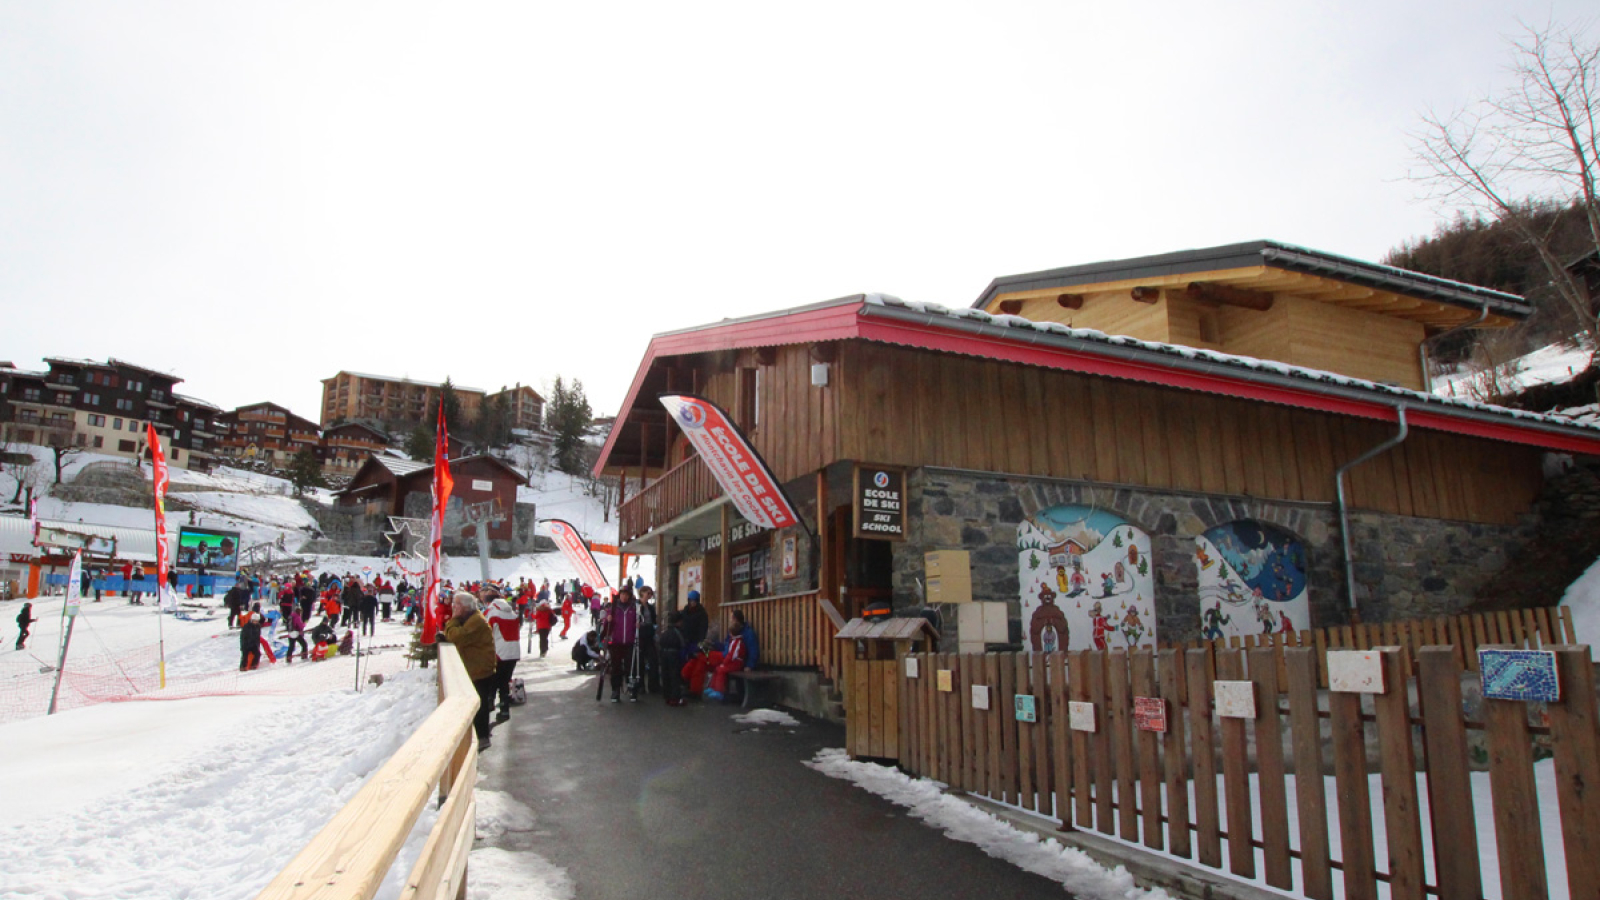 Access to Montchavin Ski School